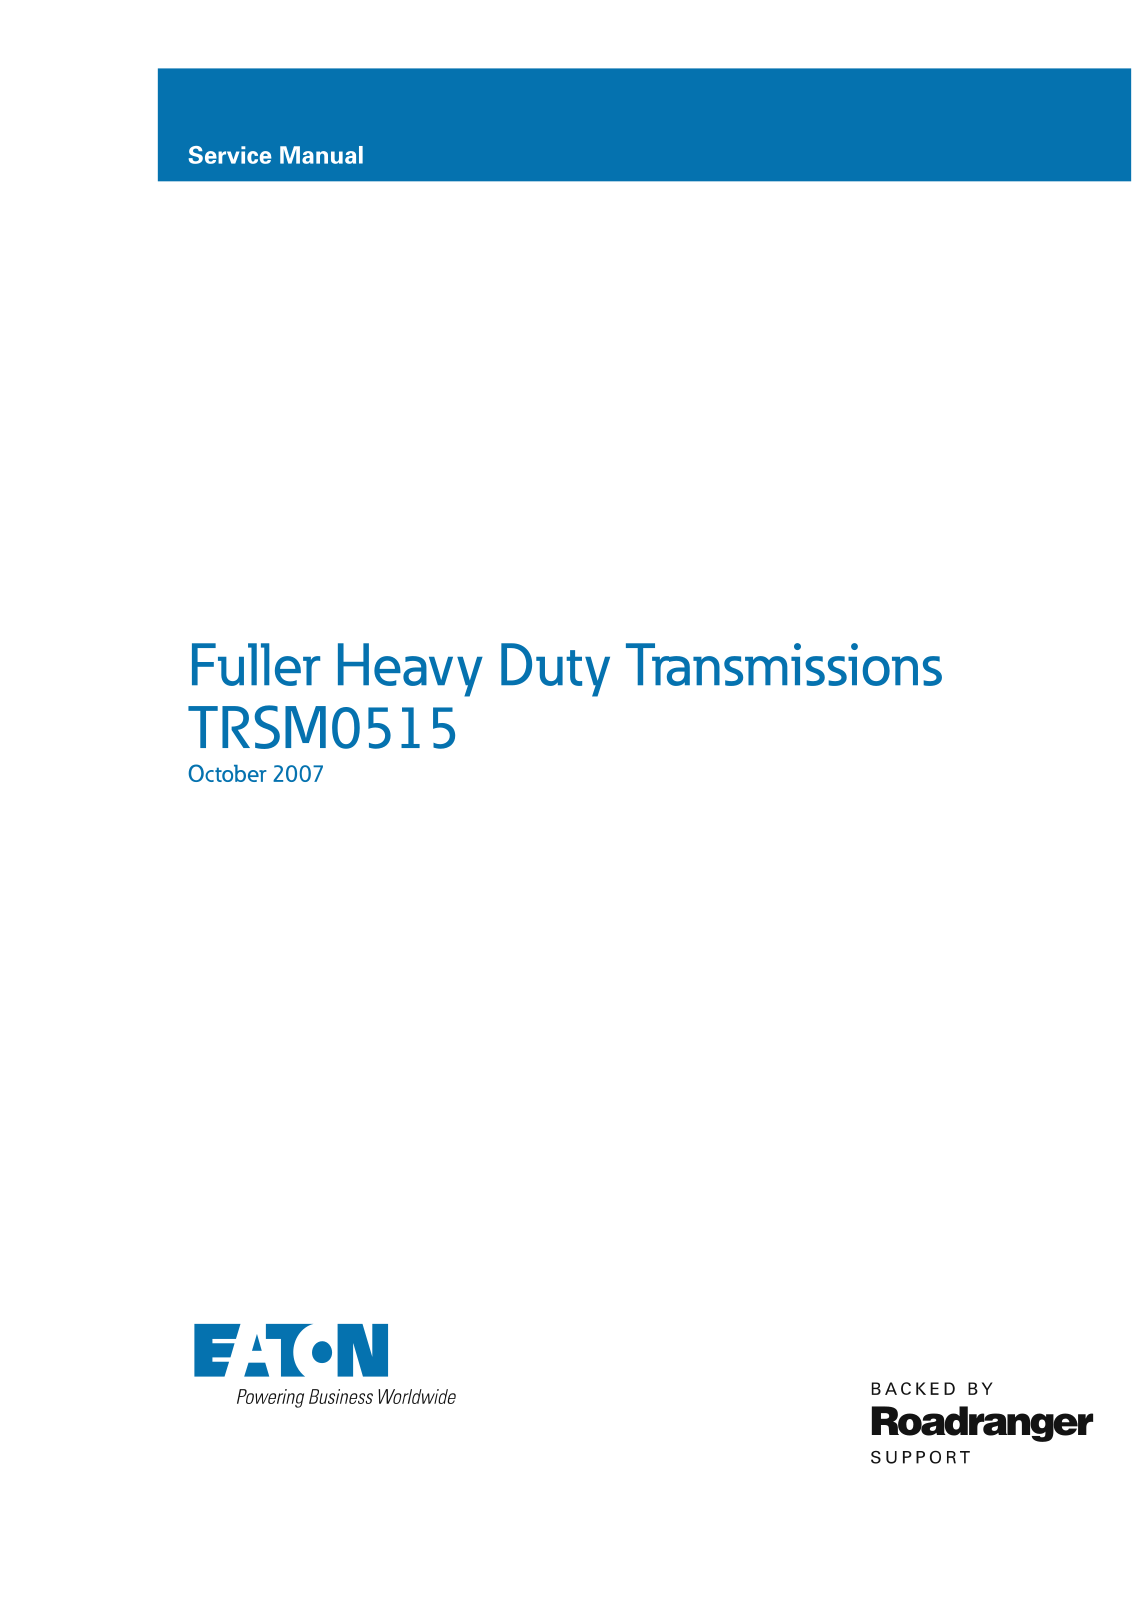 Eaton Transmission RT-6610 Service Manual